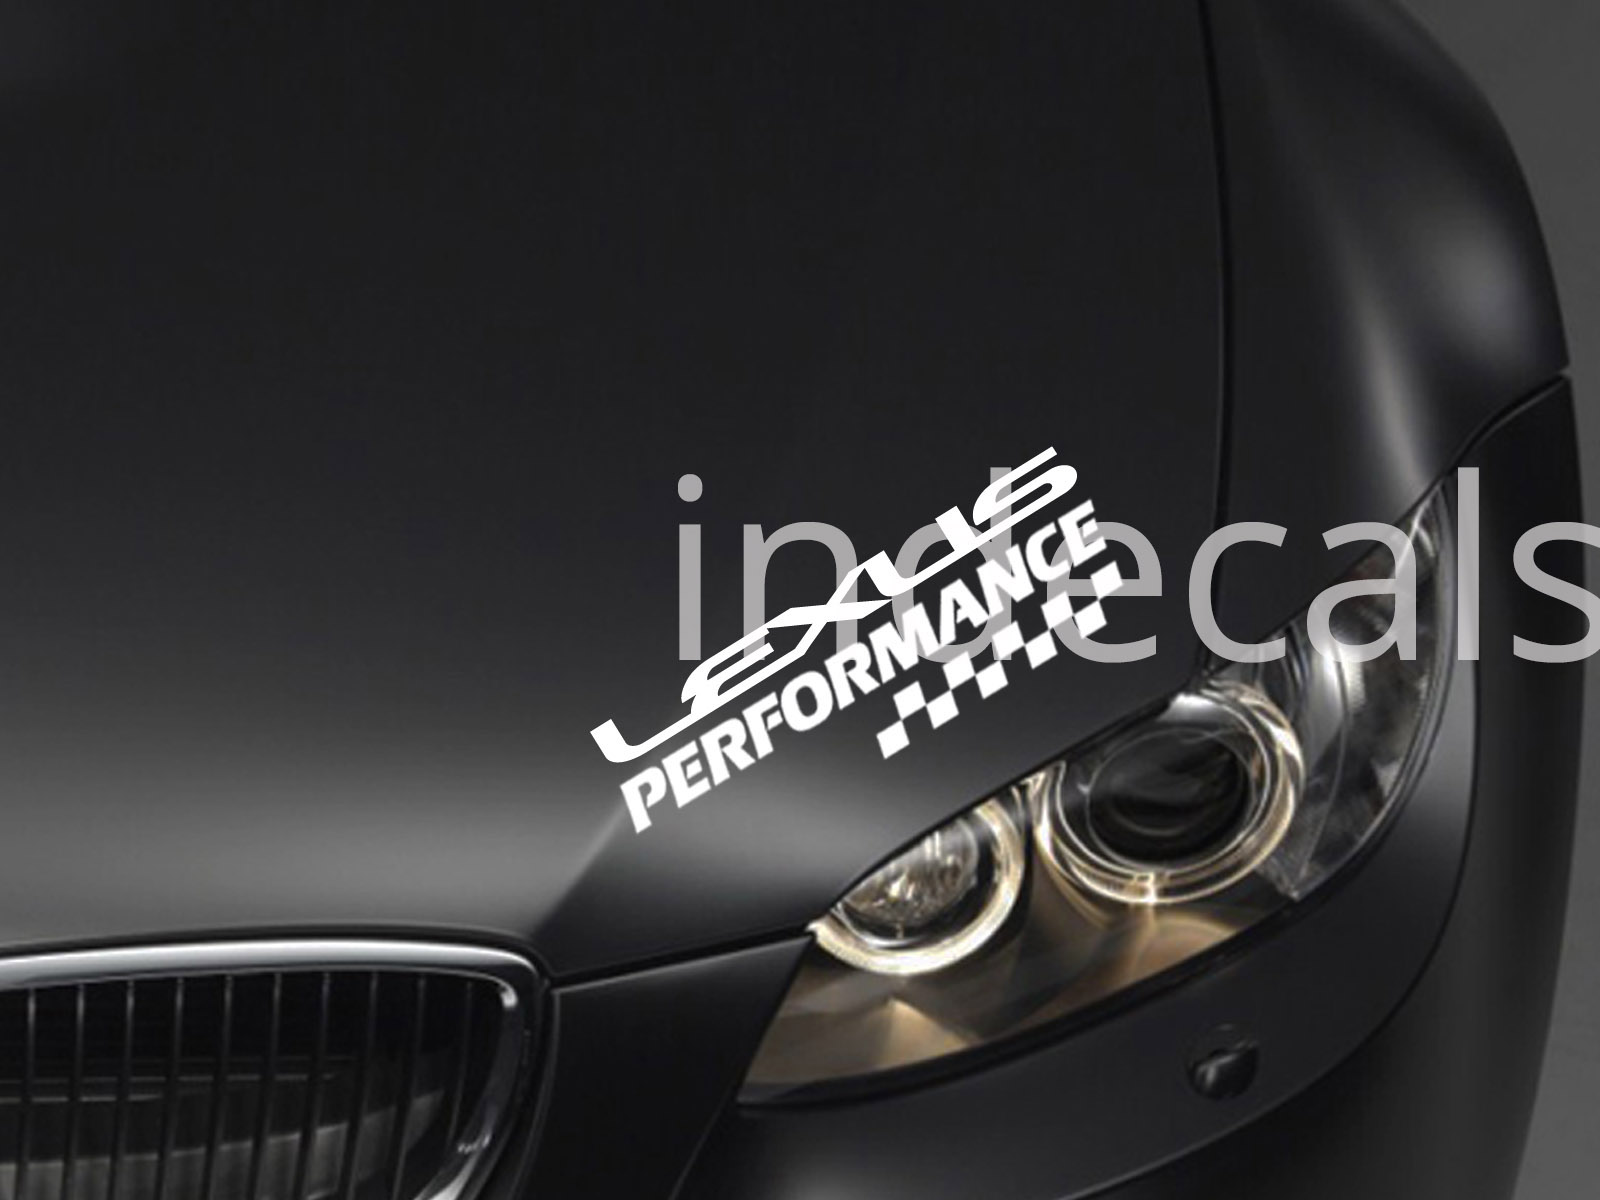 1 x Lexus Performance Sticker for Eyebrow - White